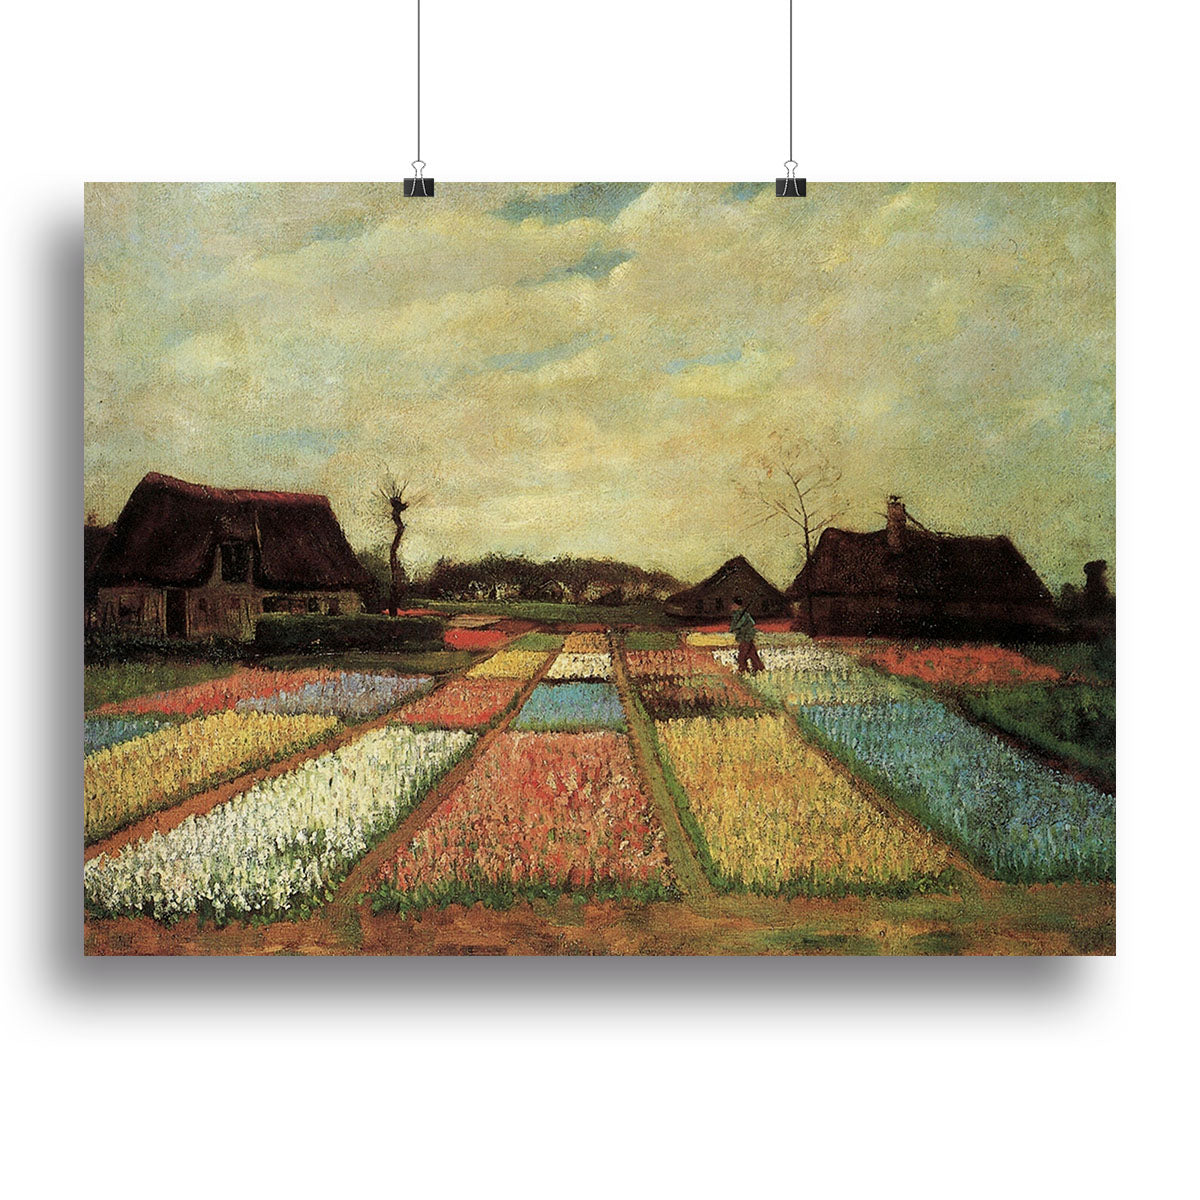 Bulb Fields by Van Gogh Canvas Print or Poster - Canvas Art Rocks - 2